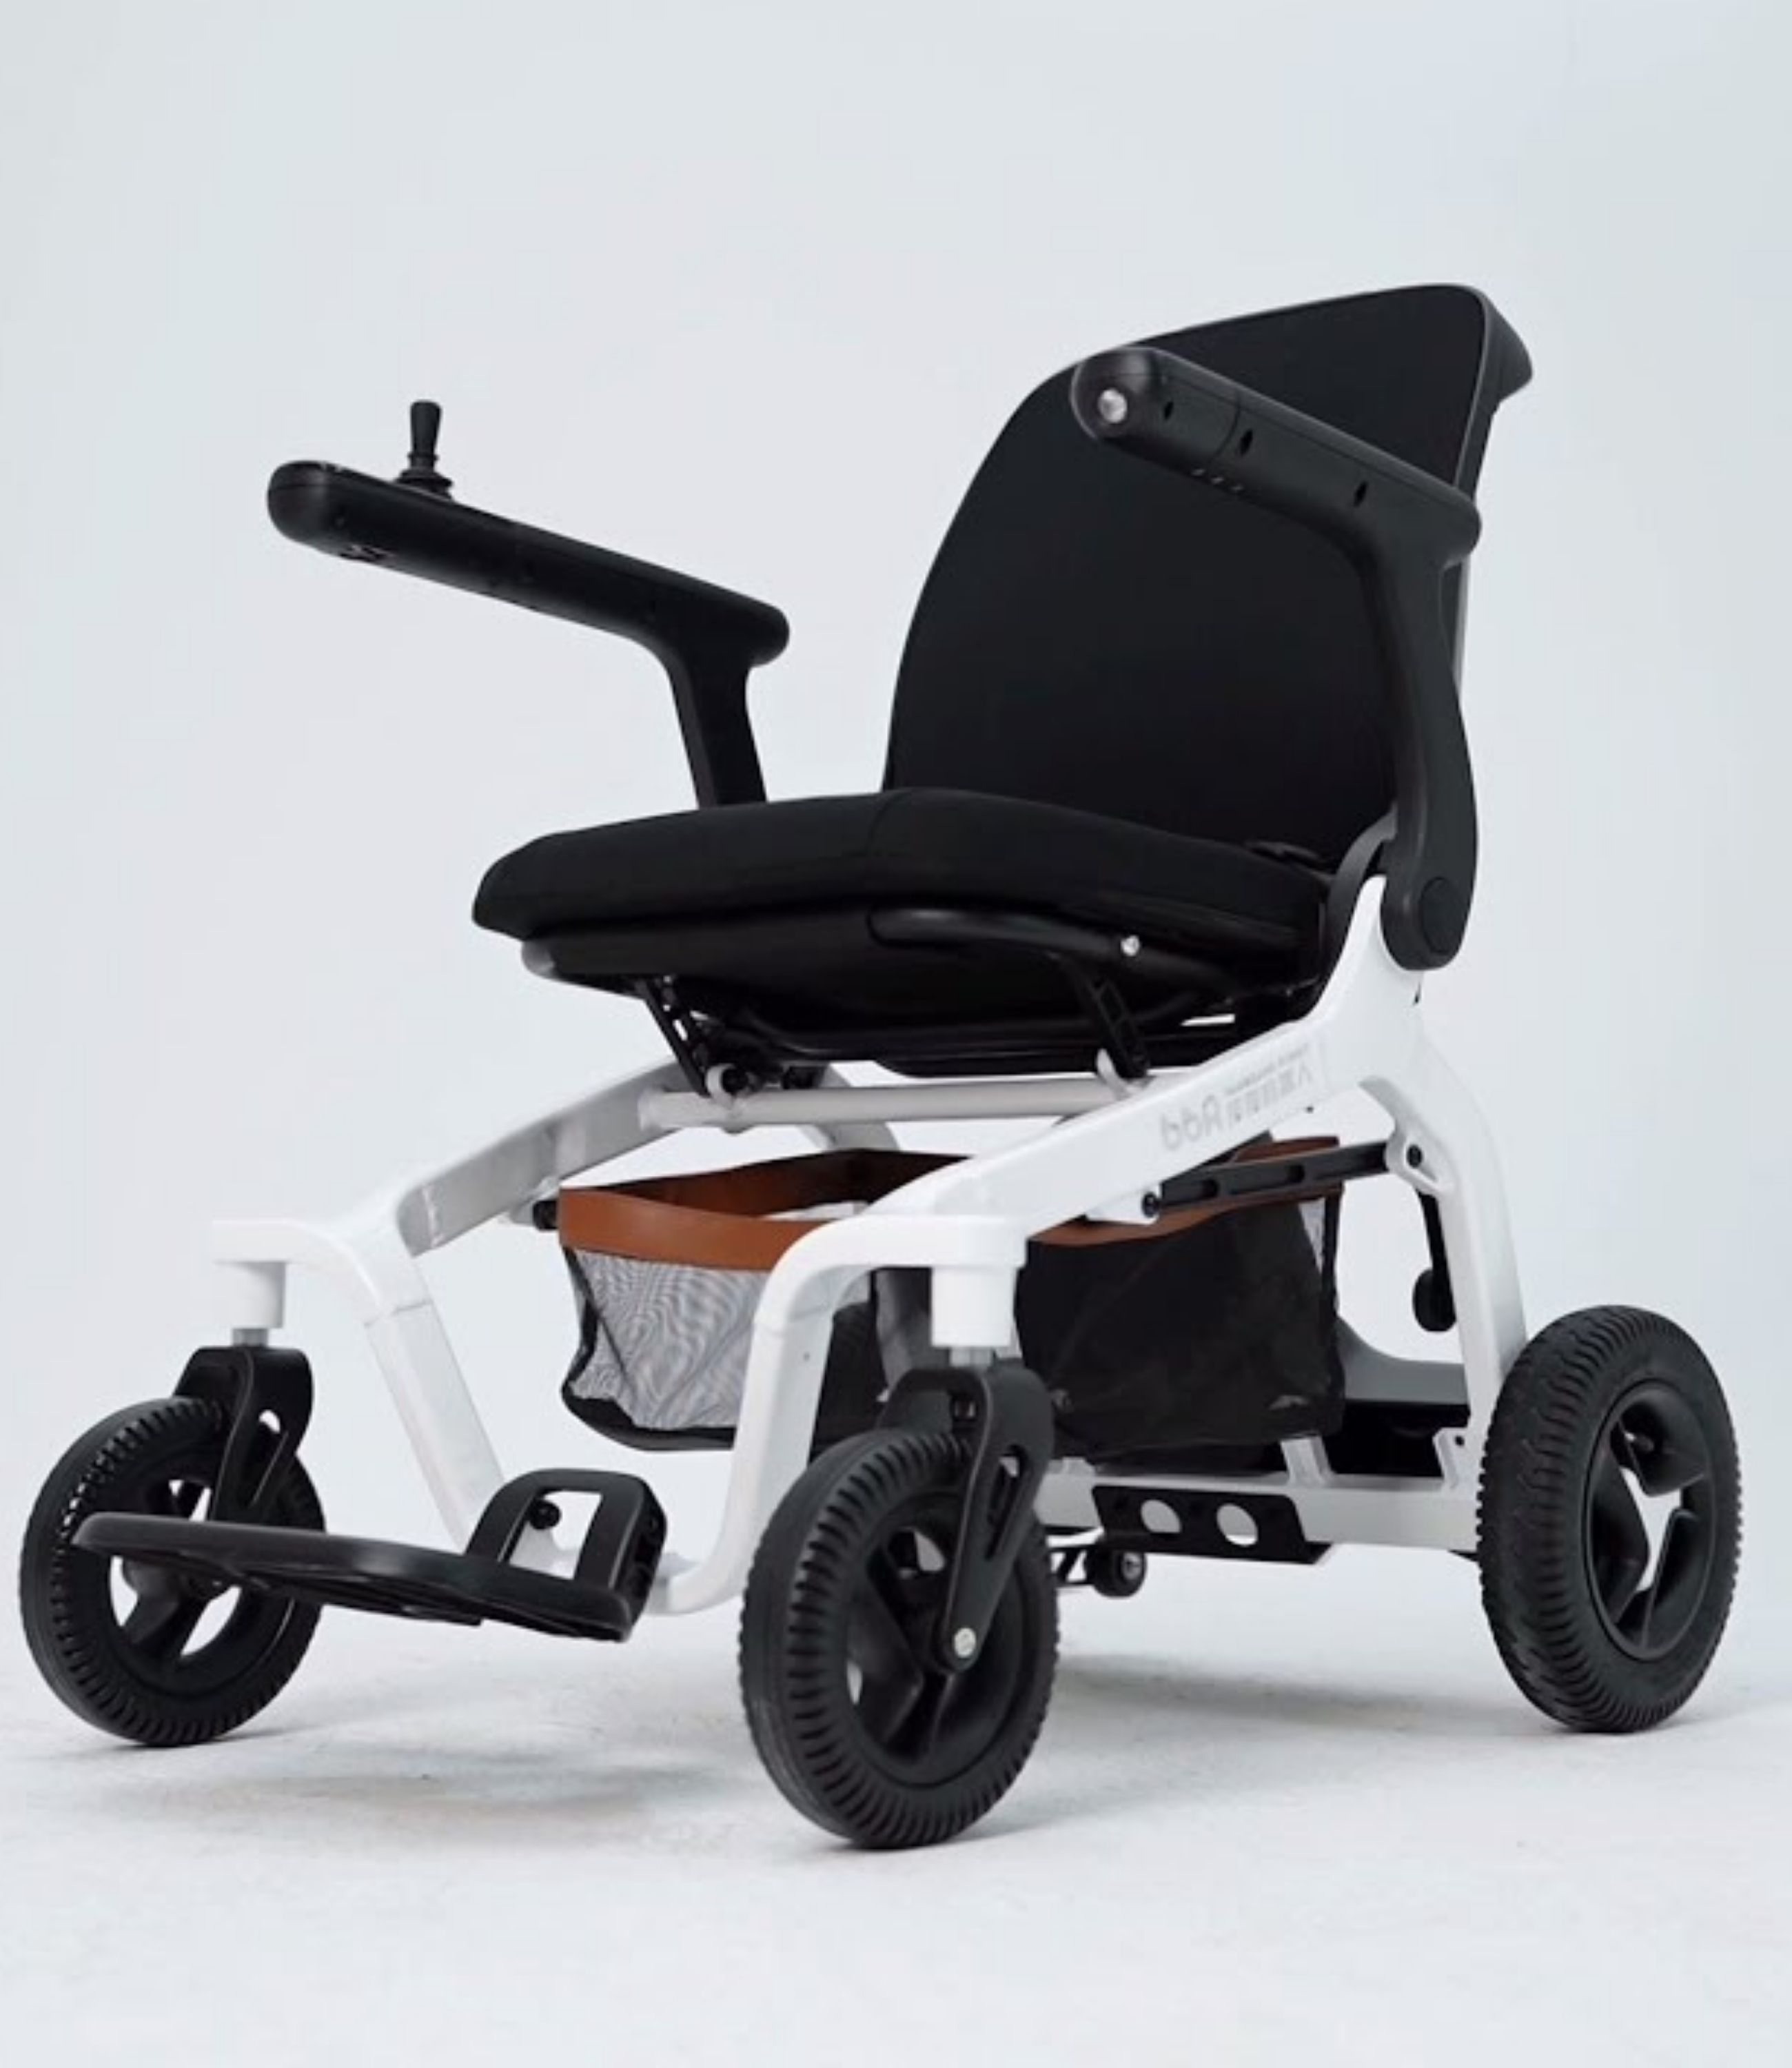 Robooter E40, the second smart powered aluminium wheelchair from Dash Rehab